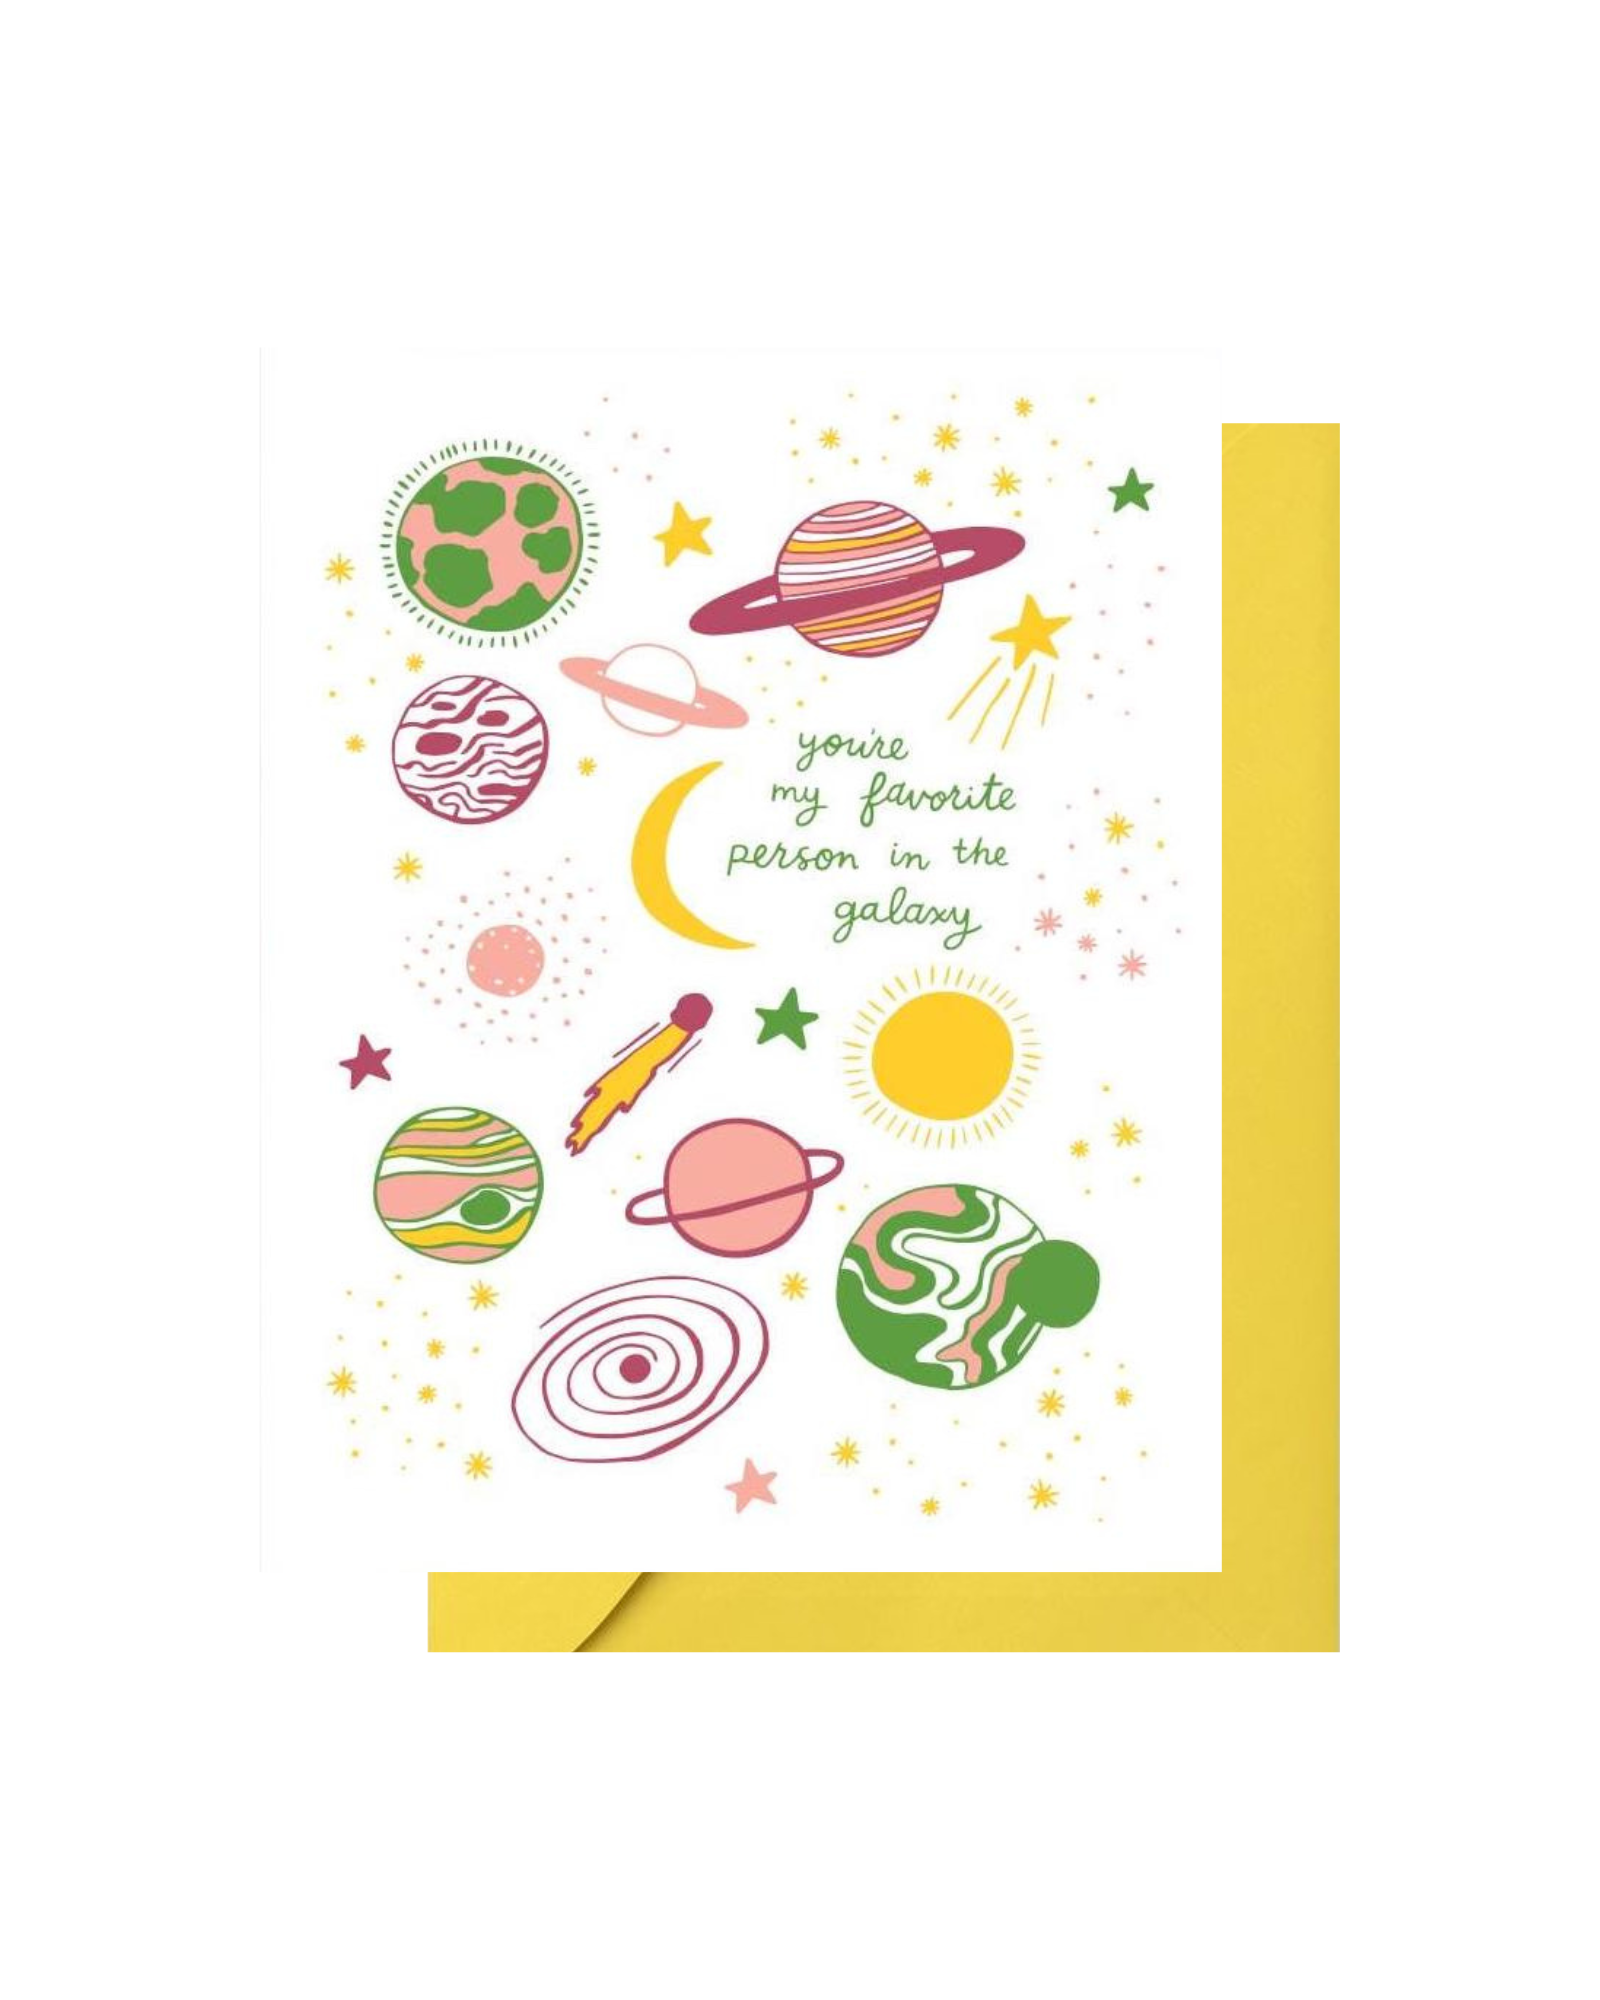 Favorite Galaxy Greeting Card